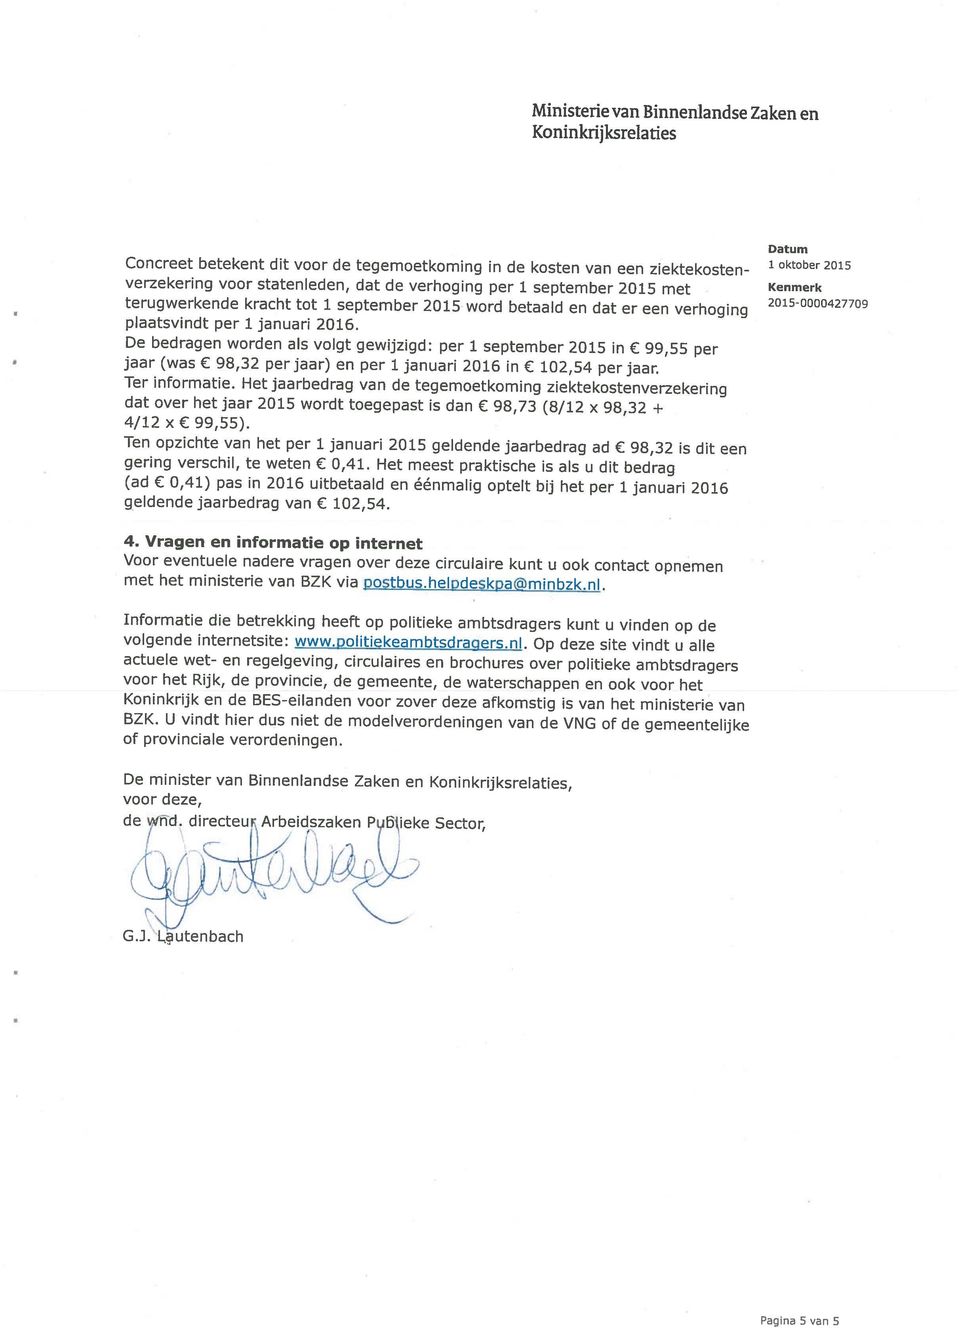 verhoging per 1 september 2015 met Kenmerk G.J. Lautenbach de whd.